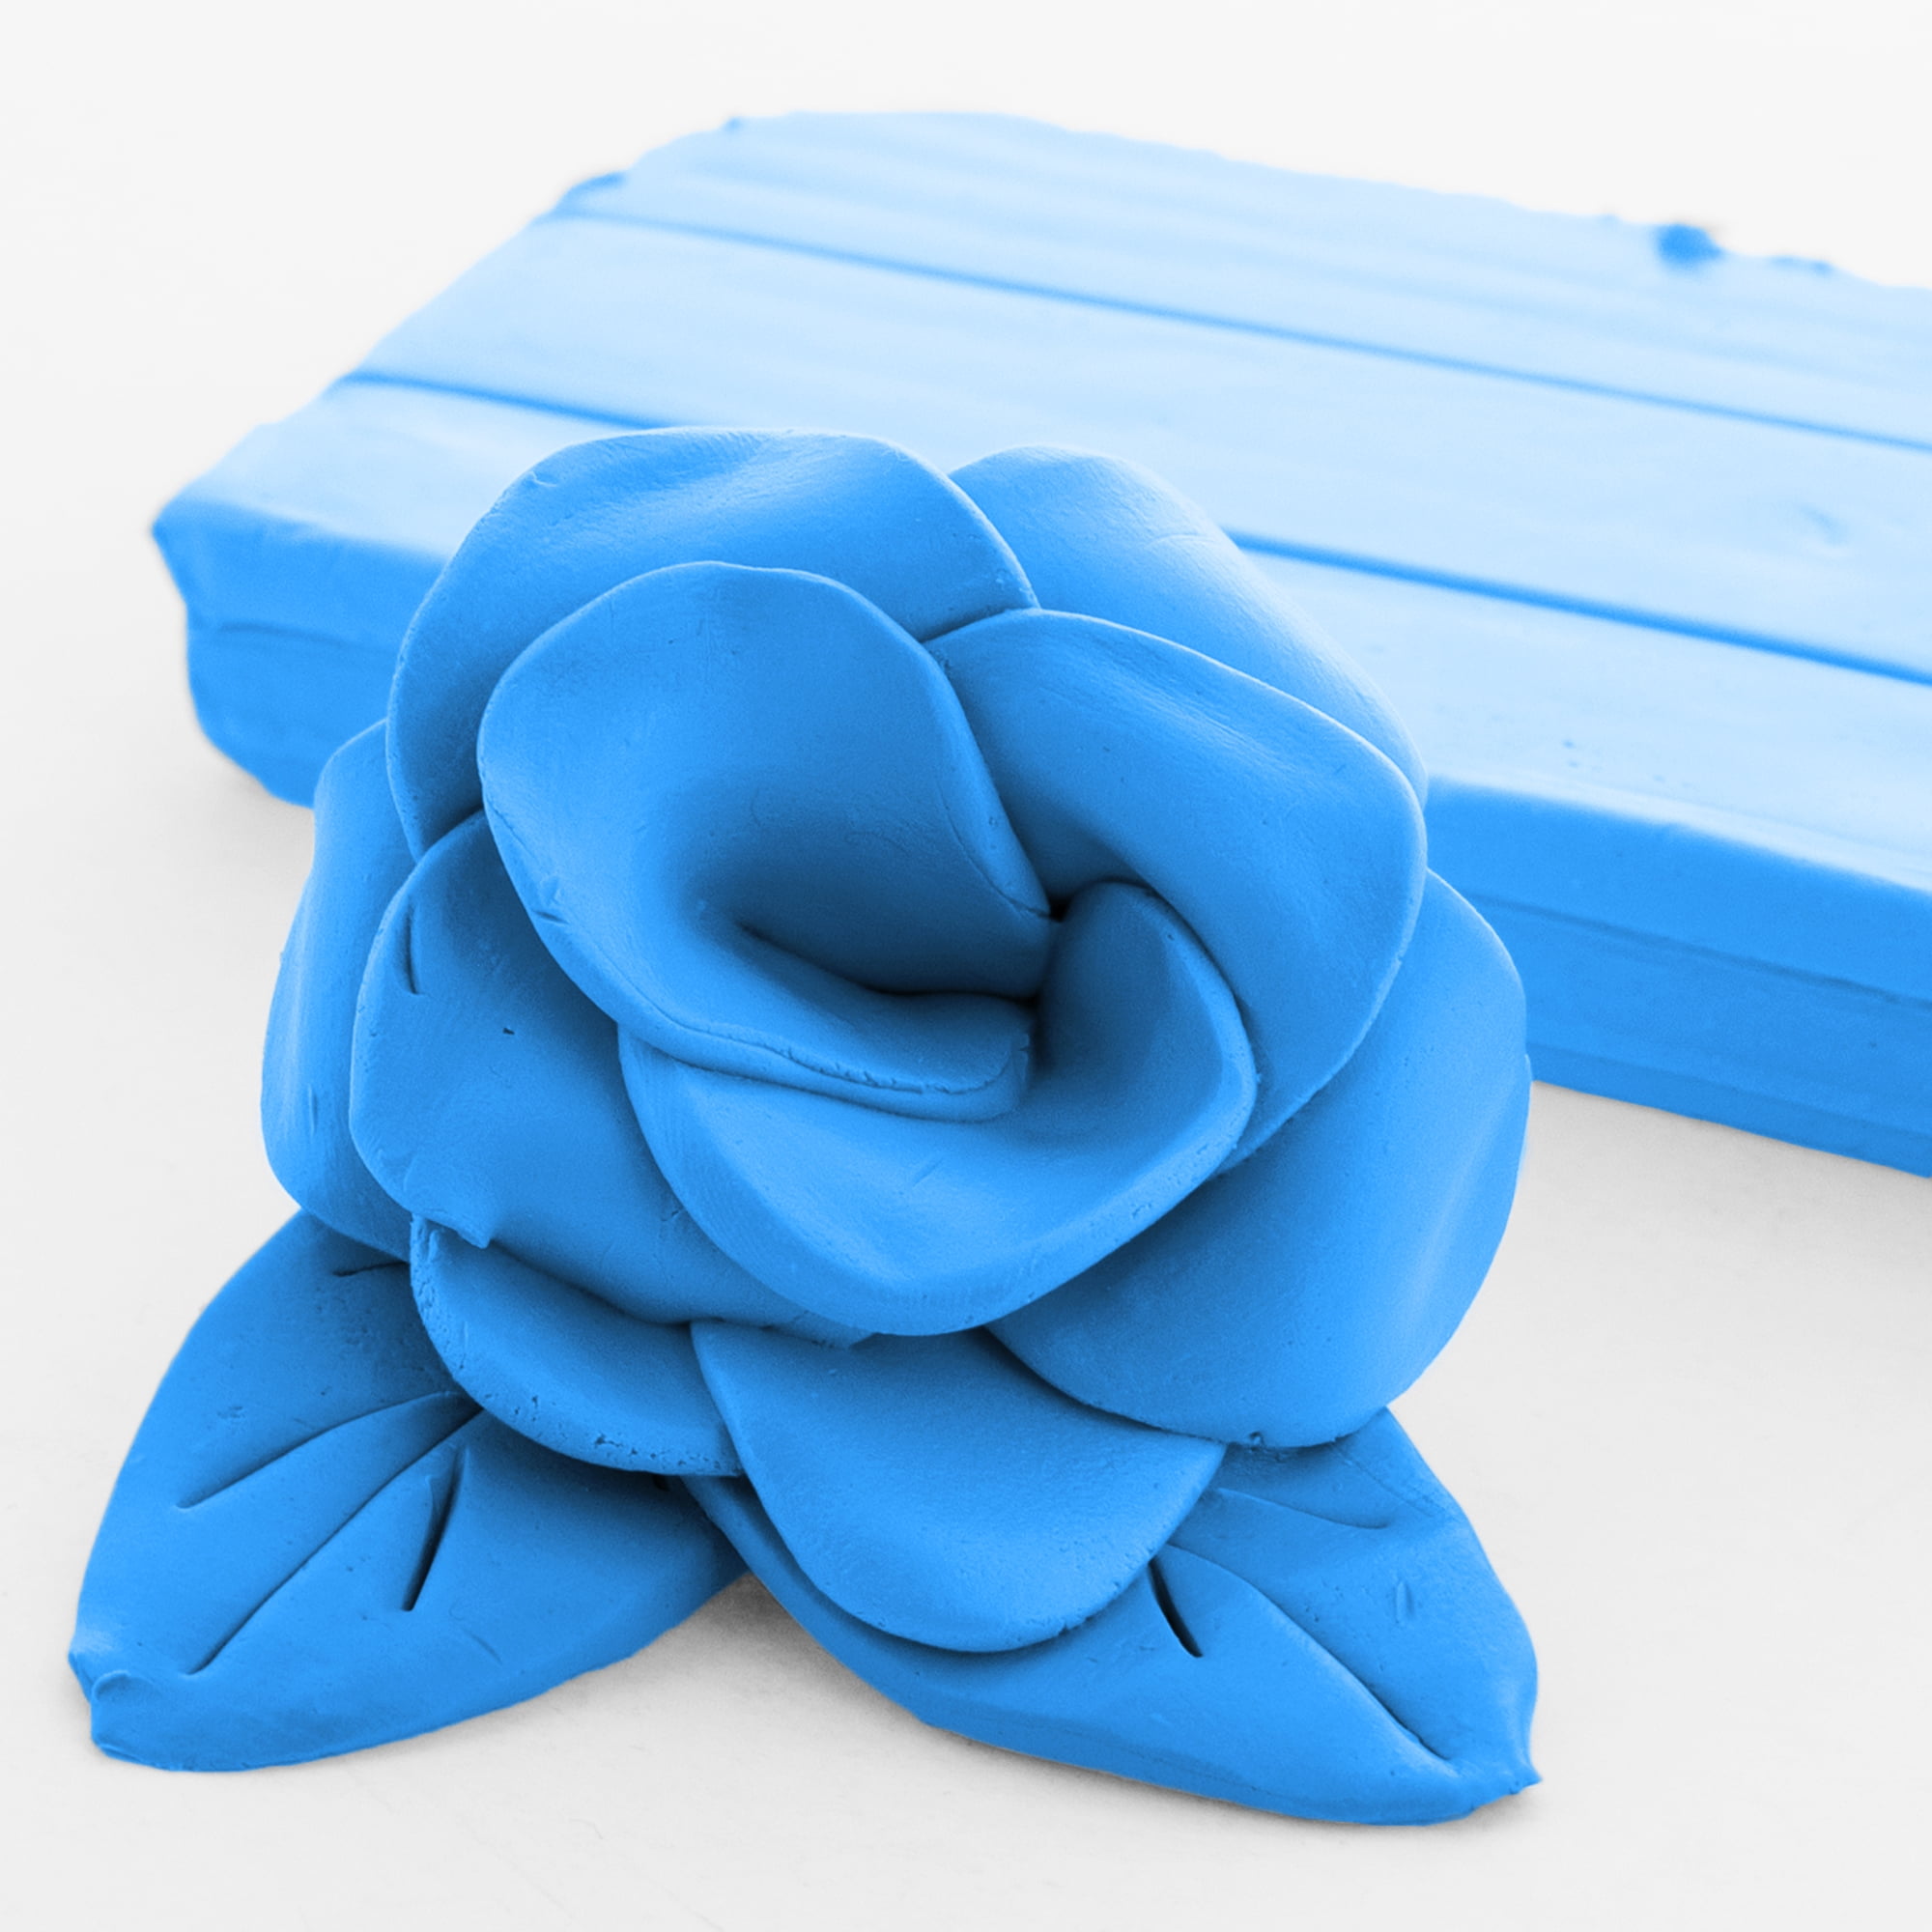 Blue modeling clay stock photo. Image of white, background - 23779420